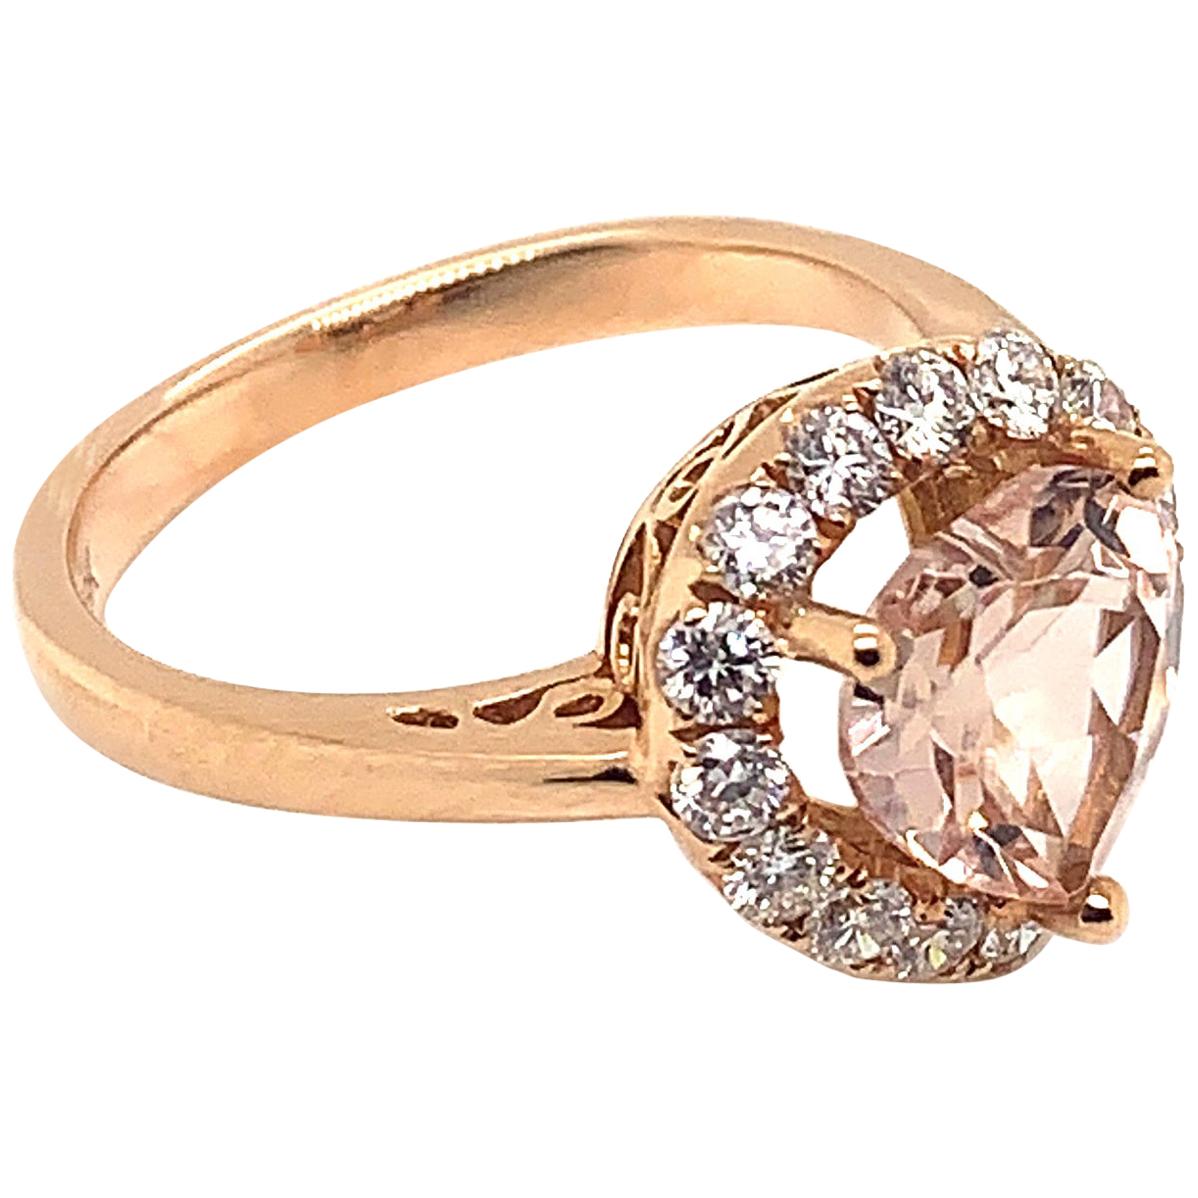 1.629 Carat Heart Shaped Morganite Ring in 18 Karat Rose Gold with Diamonds